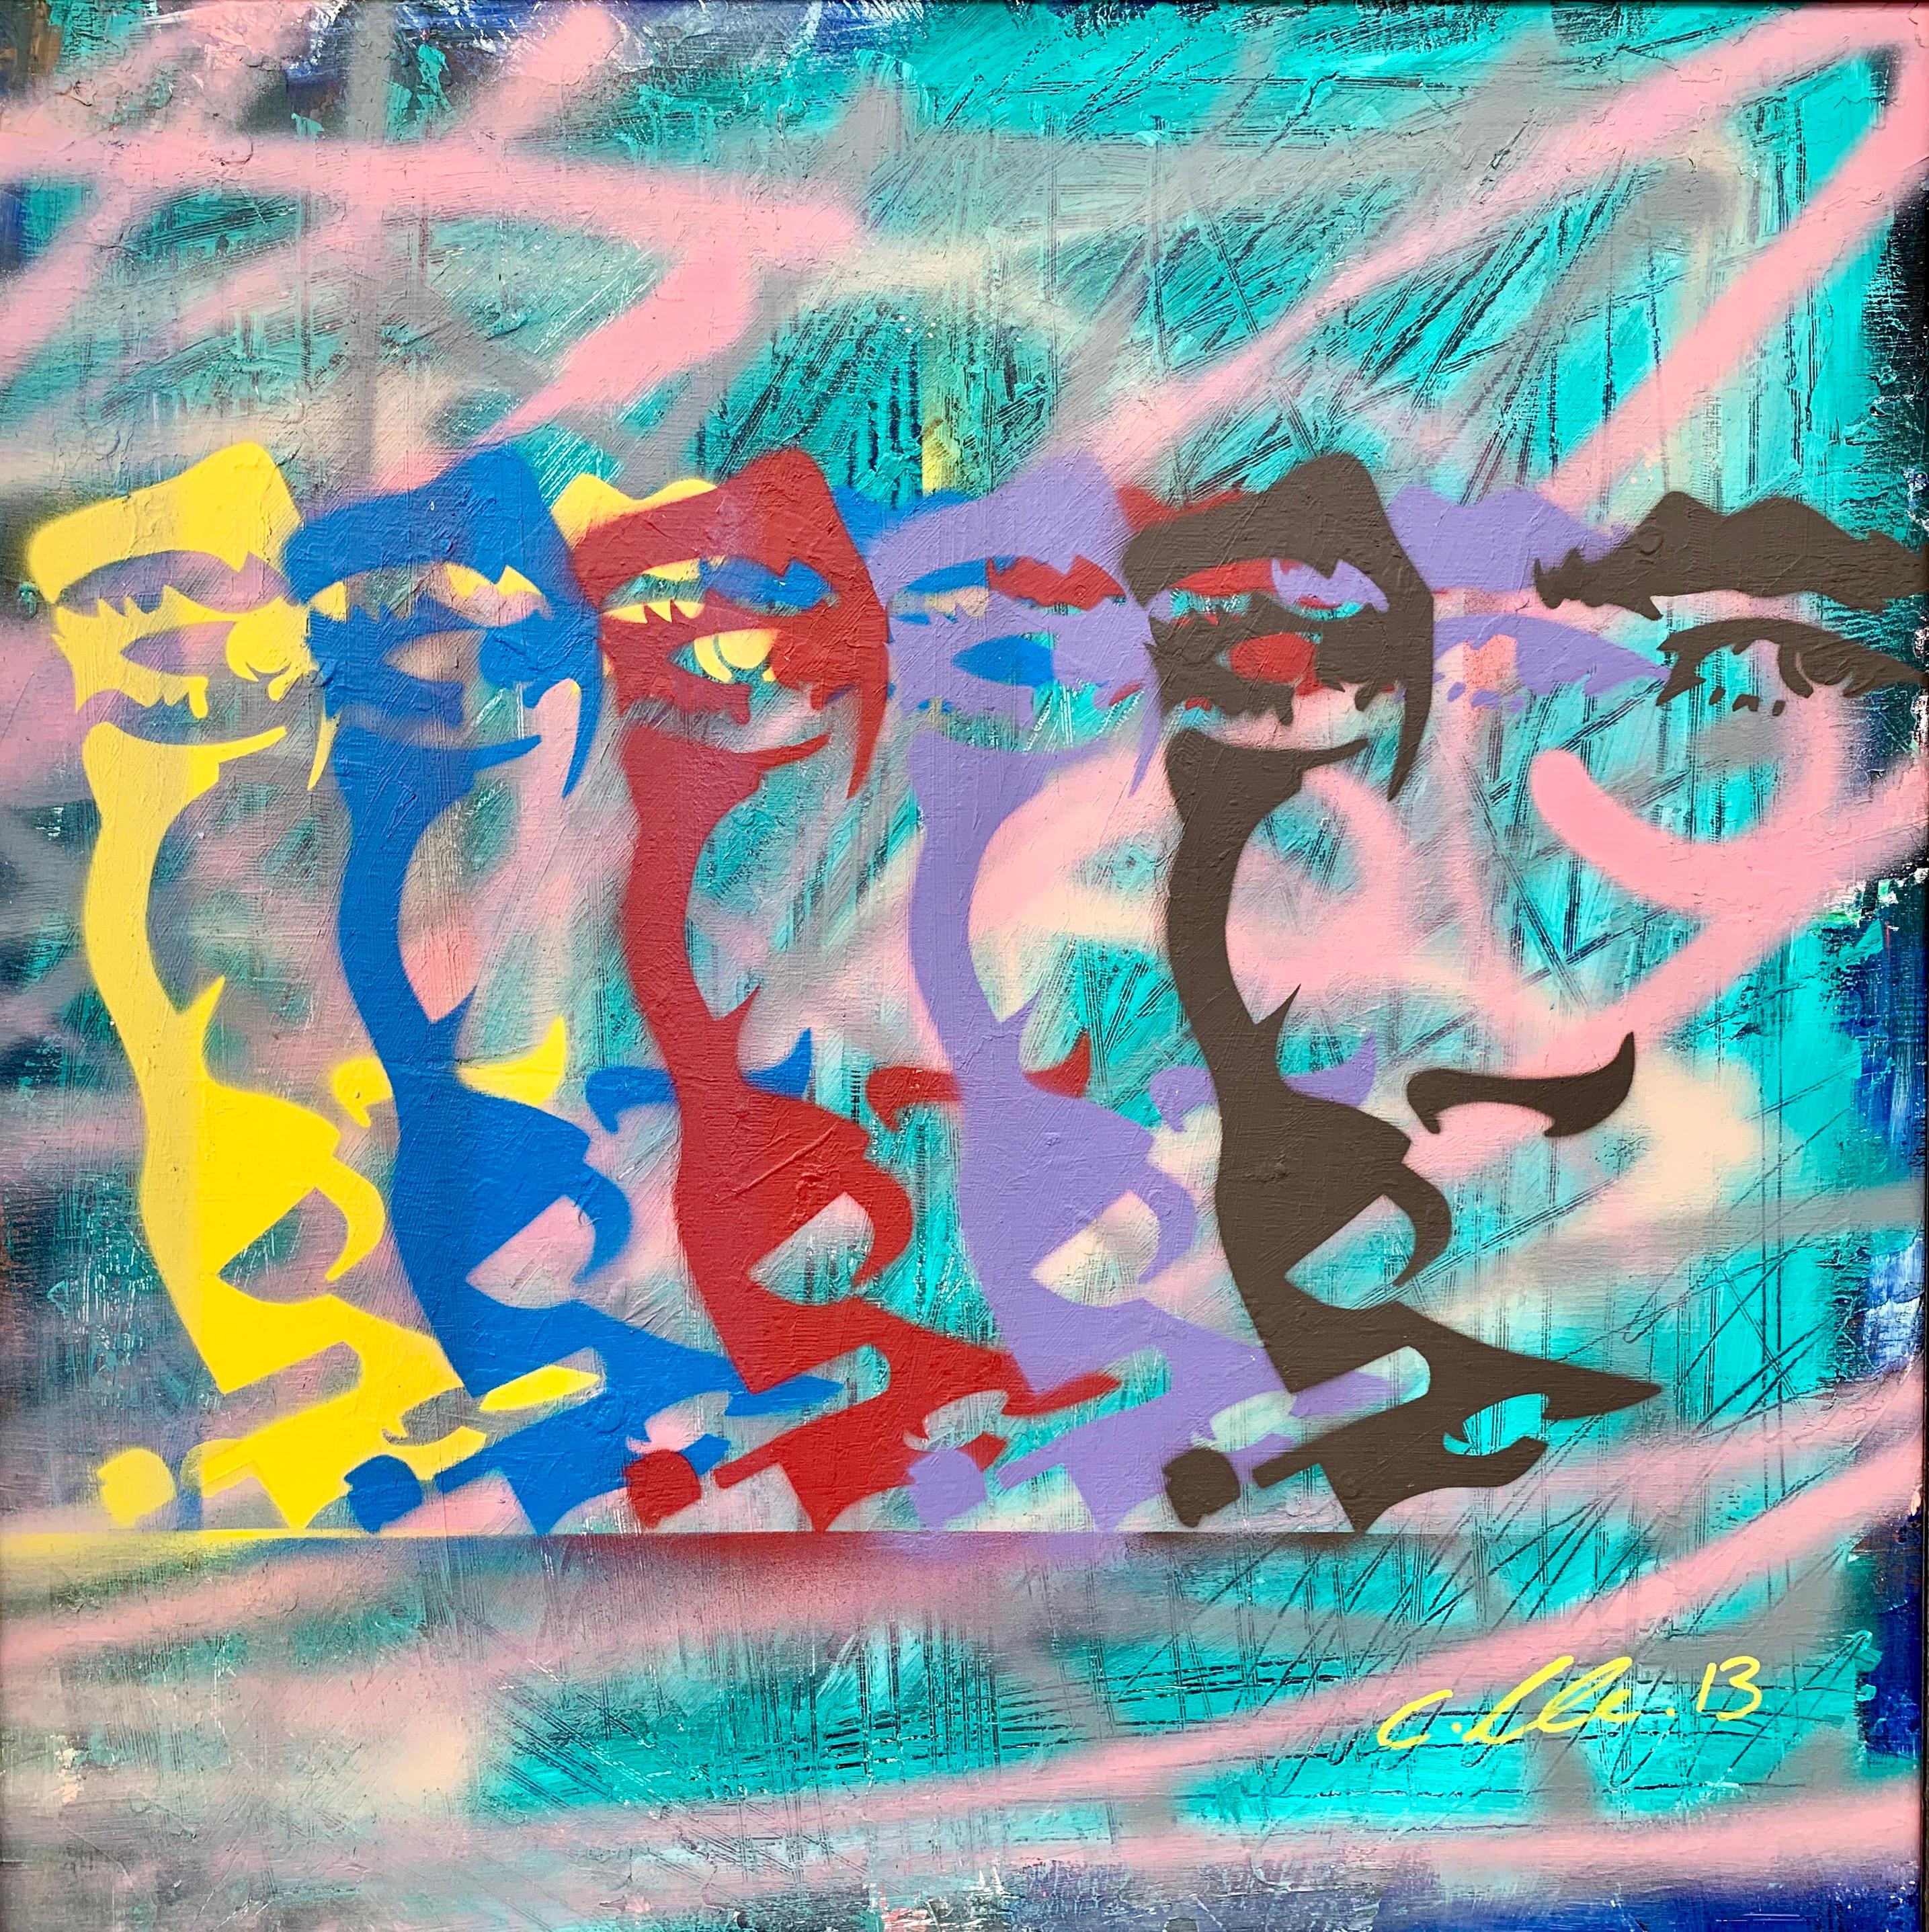 James Dean Rauch-Zigarettenporträt-Porträt Pop-Art des britischen Urban Graffiti-Künstlers – Painting von Chris Pegg